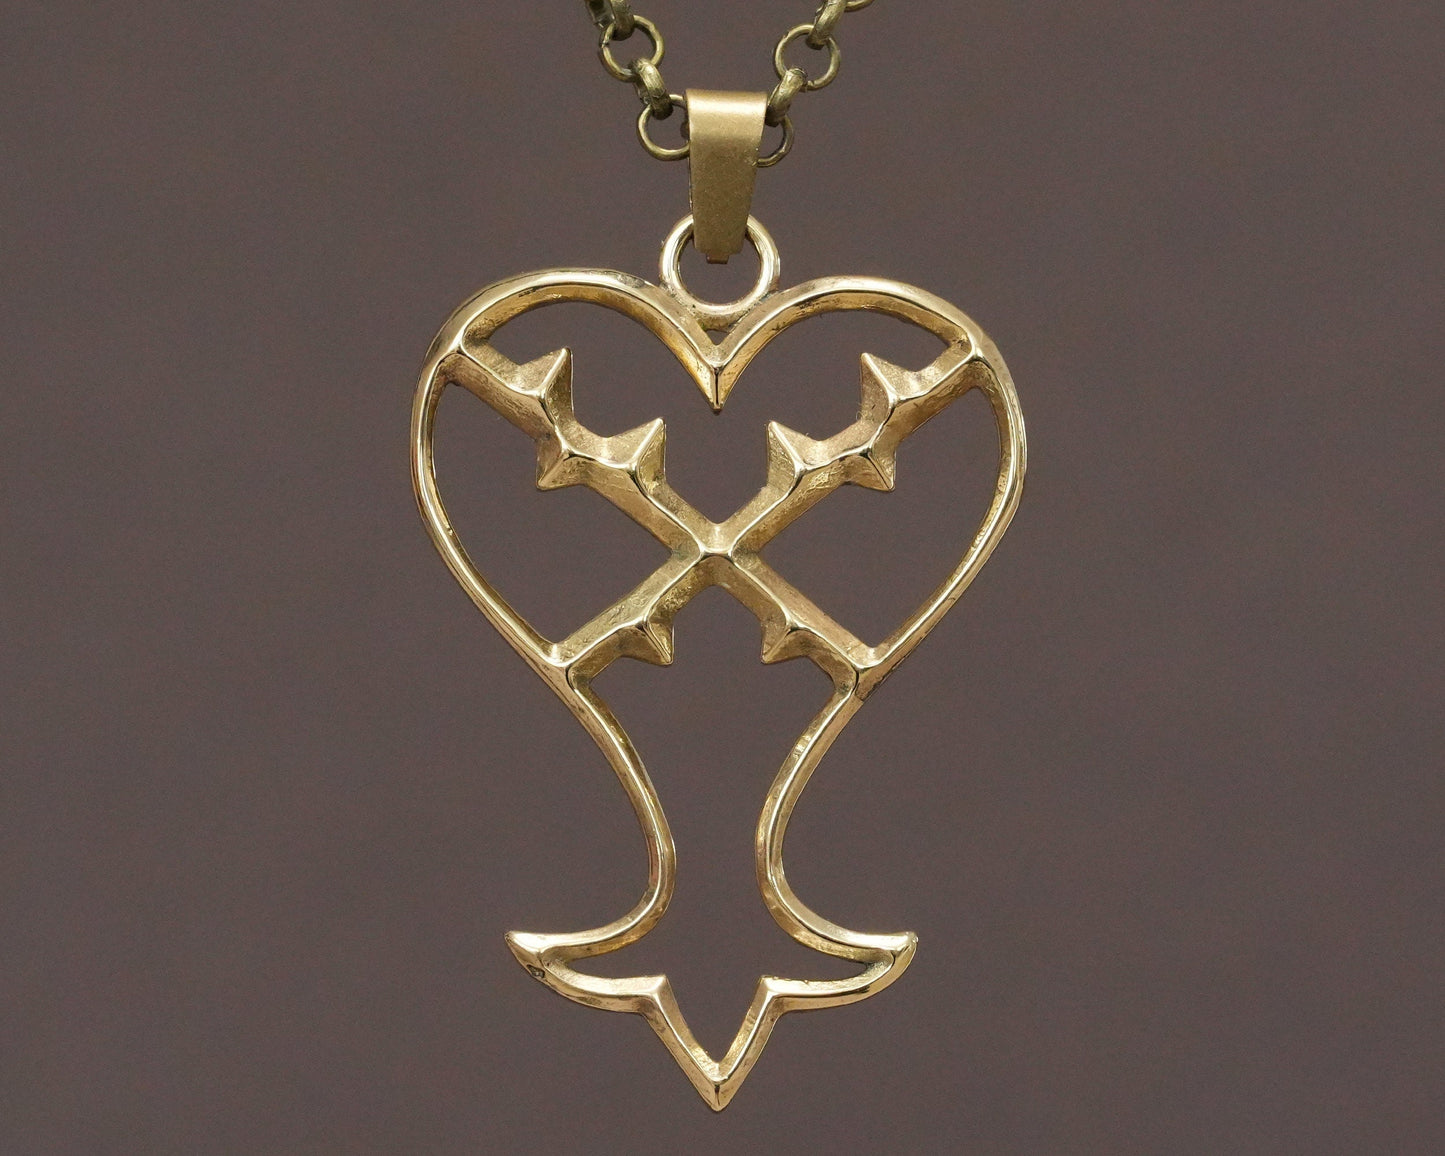 925 Sterling Silver Kingdom Heart Heartless Pendant Necklace Jewelry Amulet Talisman - Baldur Jewelry